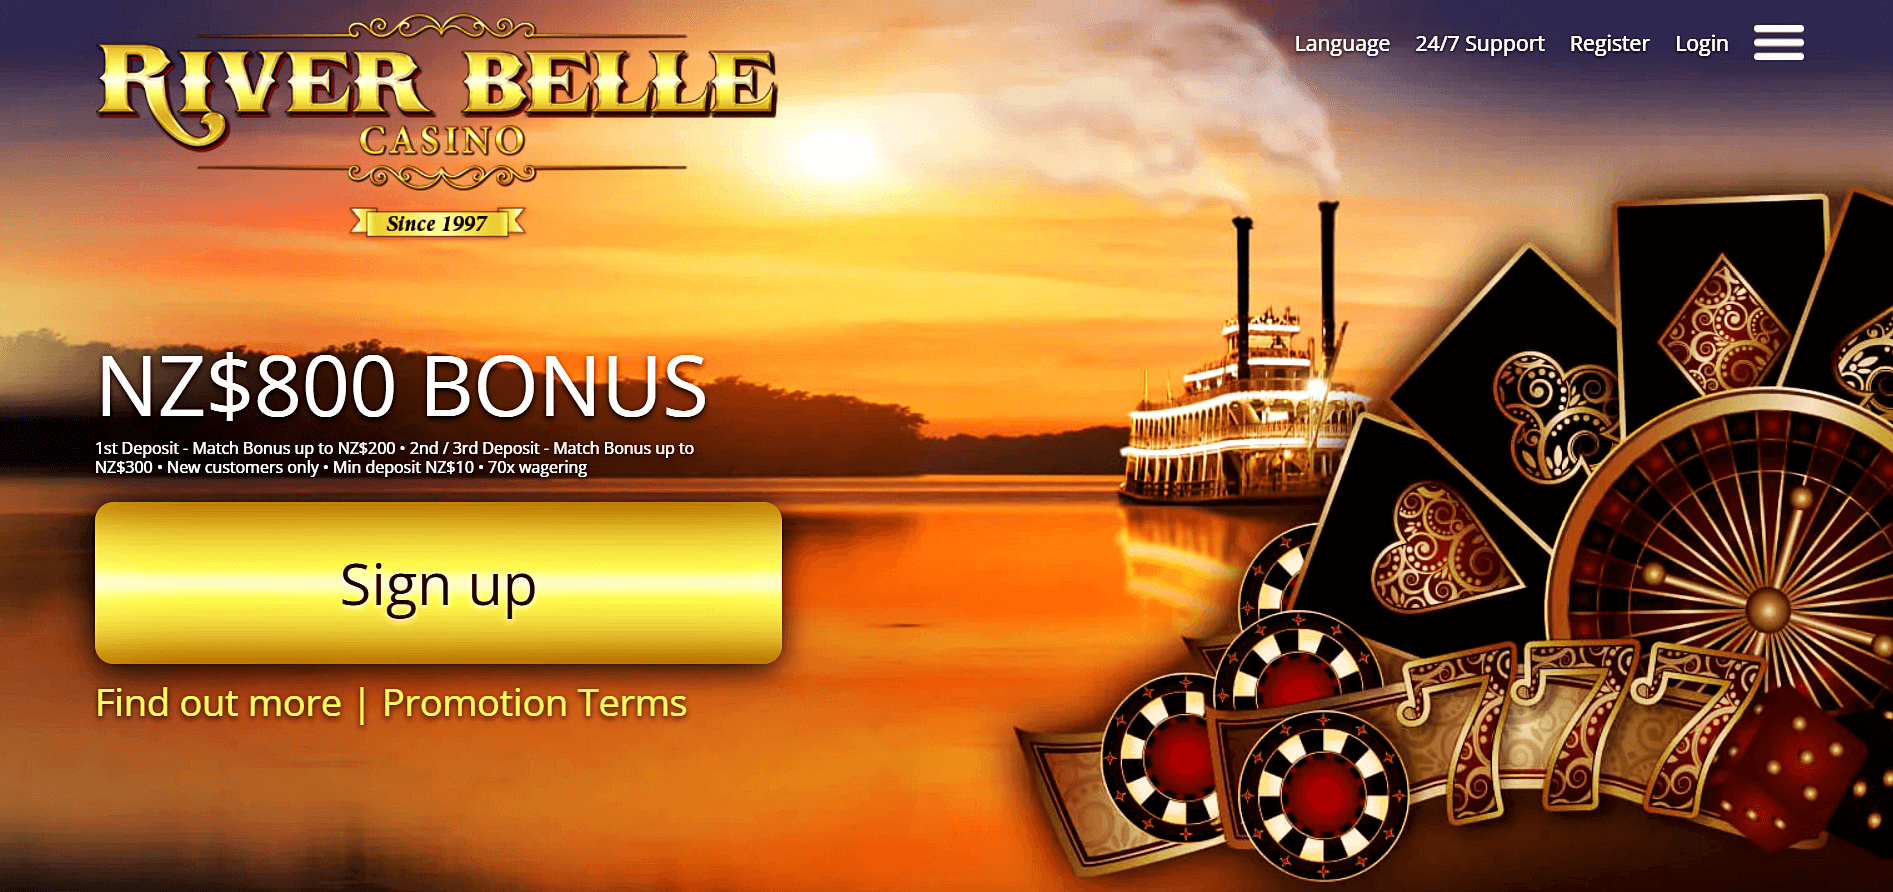 river belle online casino nz